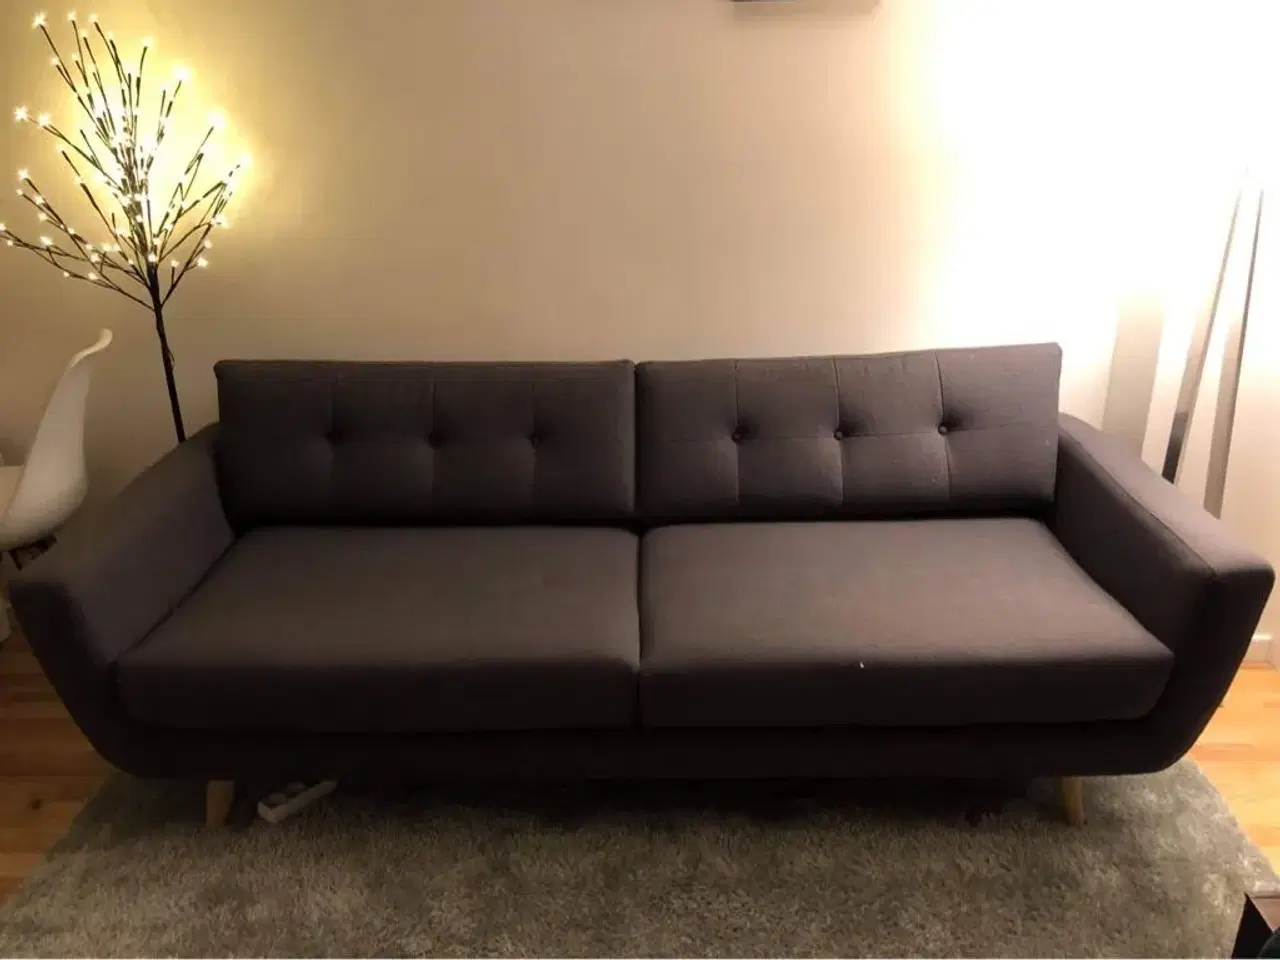 Billede 1 - 3 personers sofa fra sofacompany